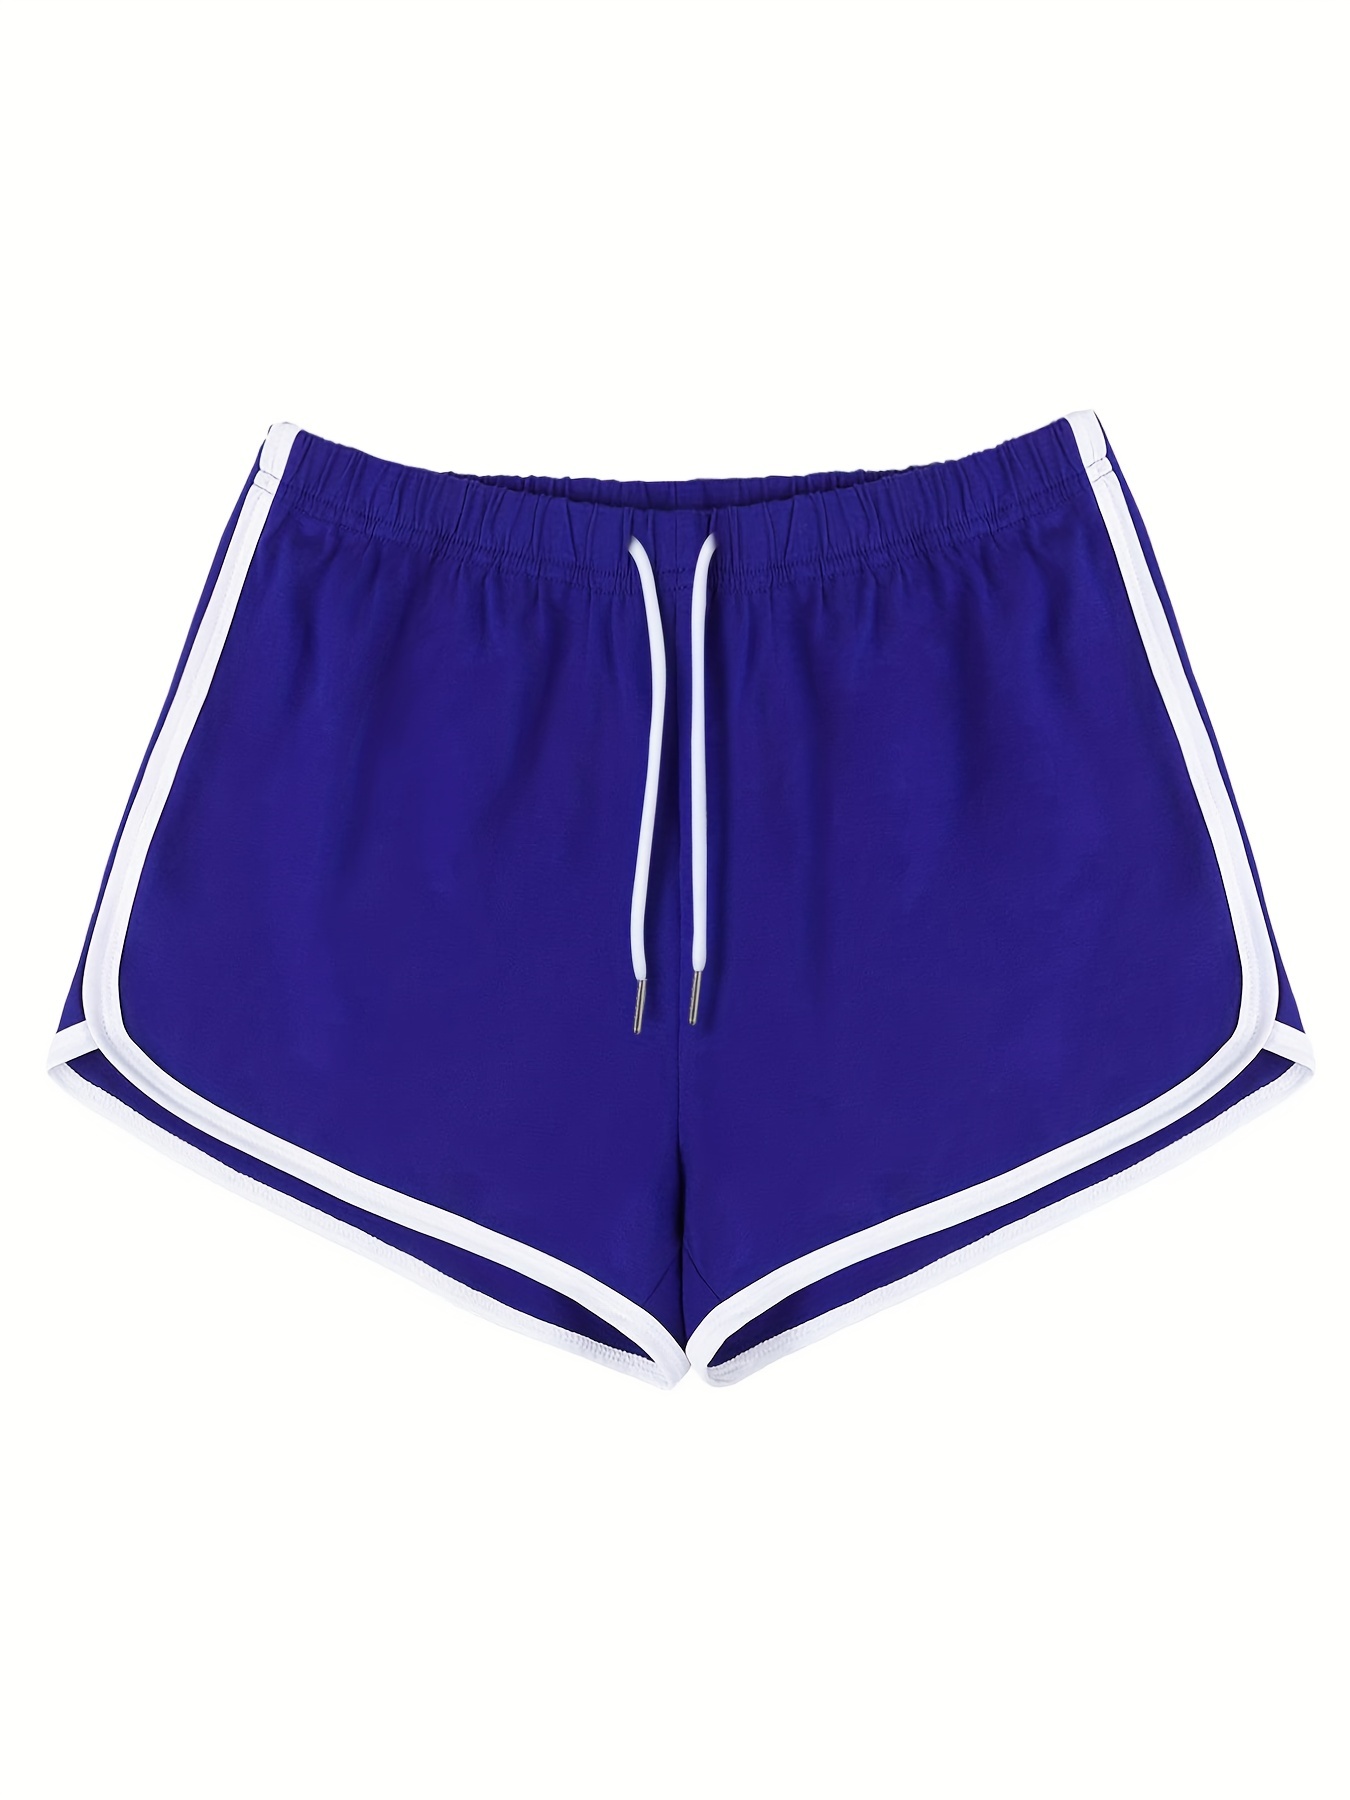 Womens Shorts Women's Workout Running Shorts Elastic High Waisted Athletic  Shorts Yoga Sport Gym Shorts Short, Dark Blue, M 